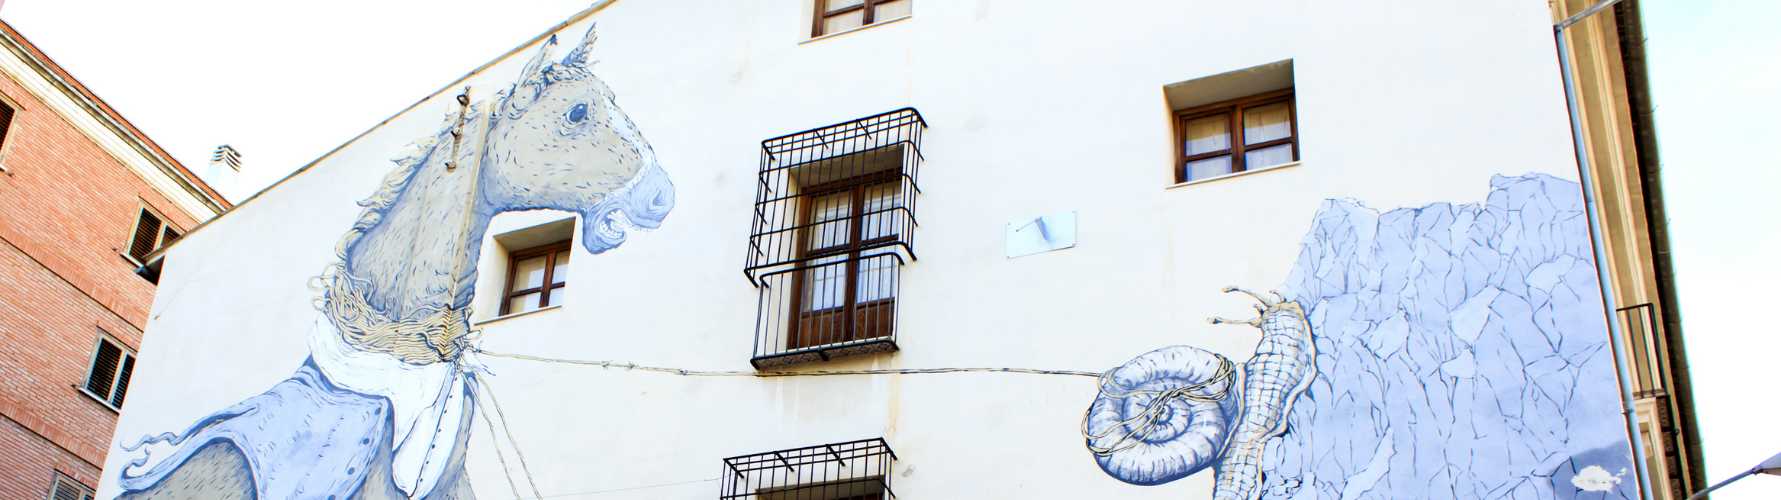 art urbain region de valencia